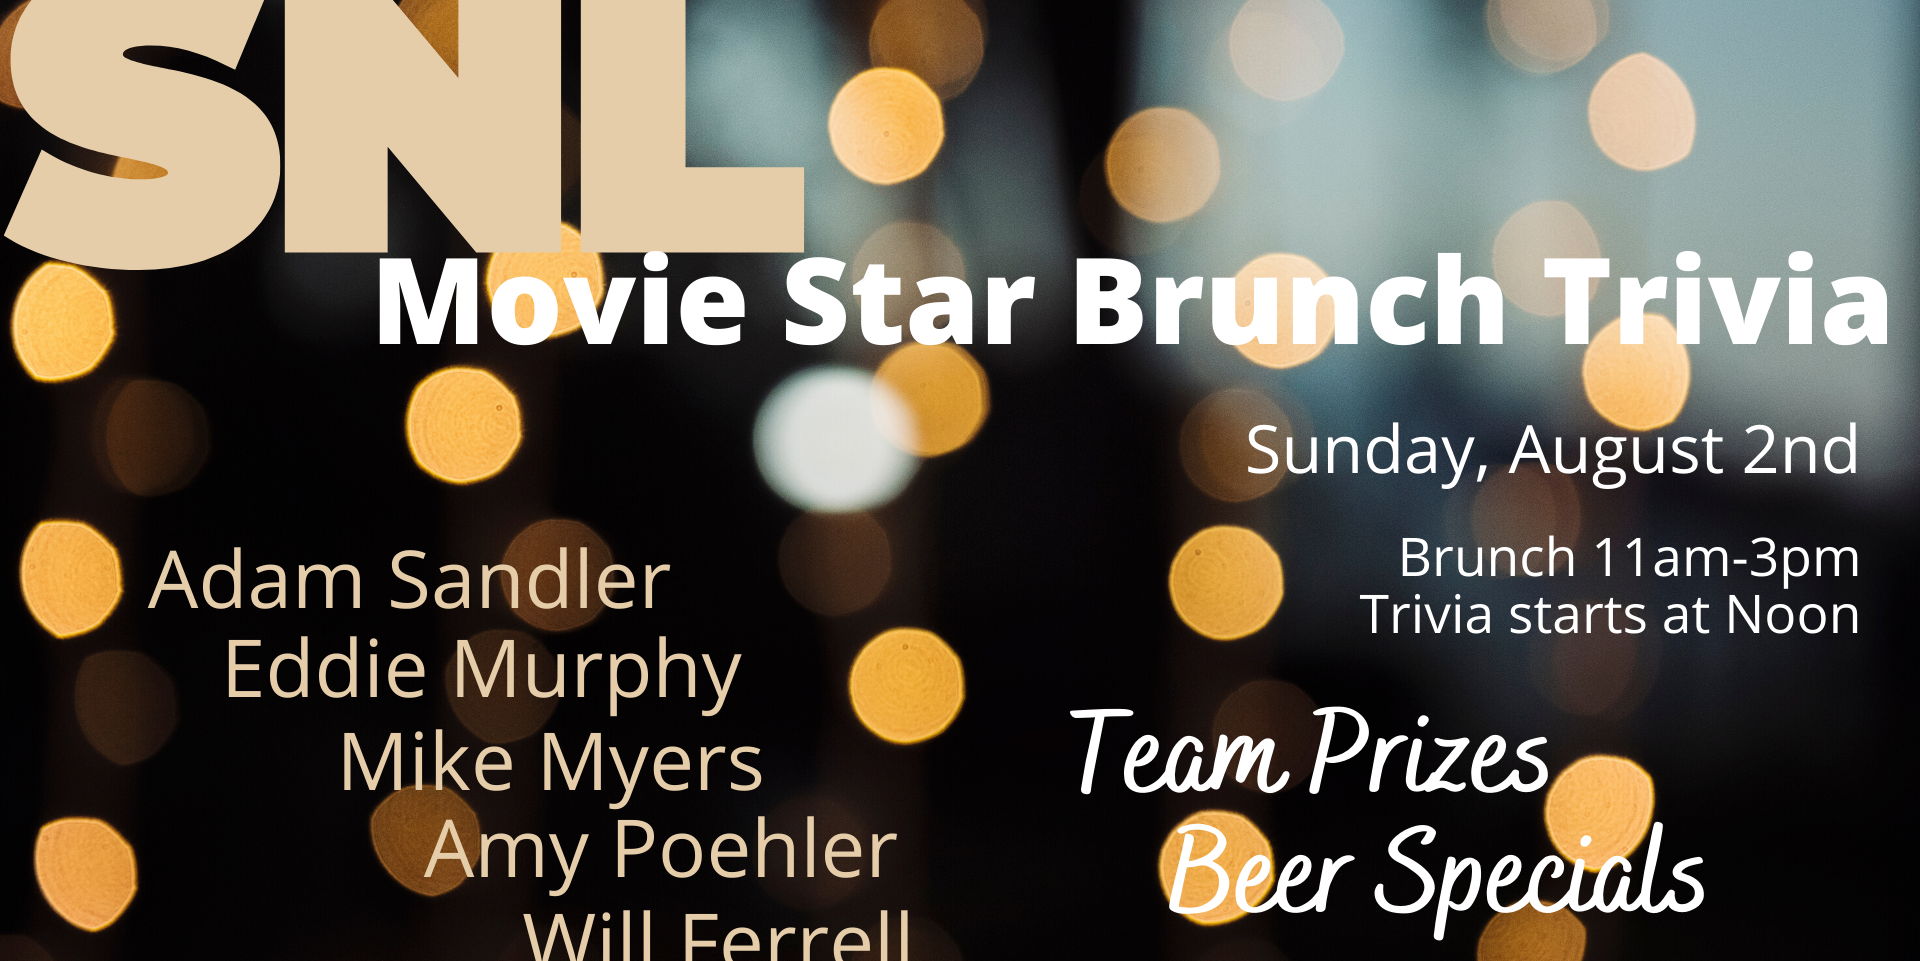 SNL Movie Star Brunch Trivia promotional image